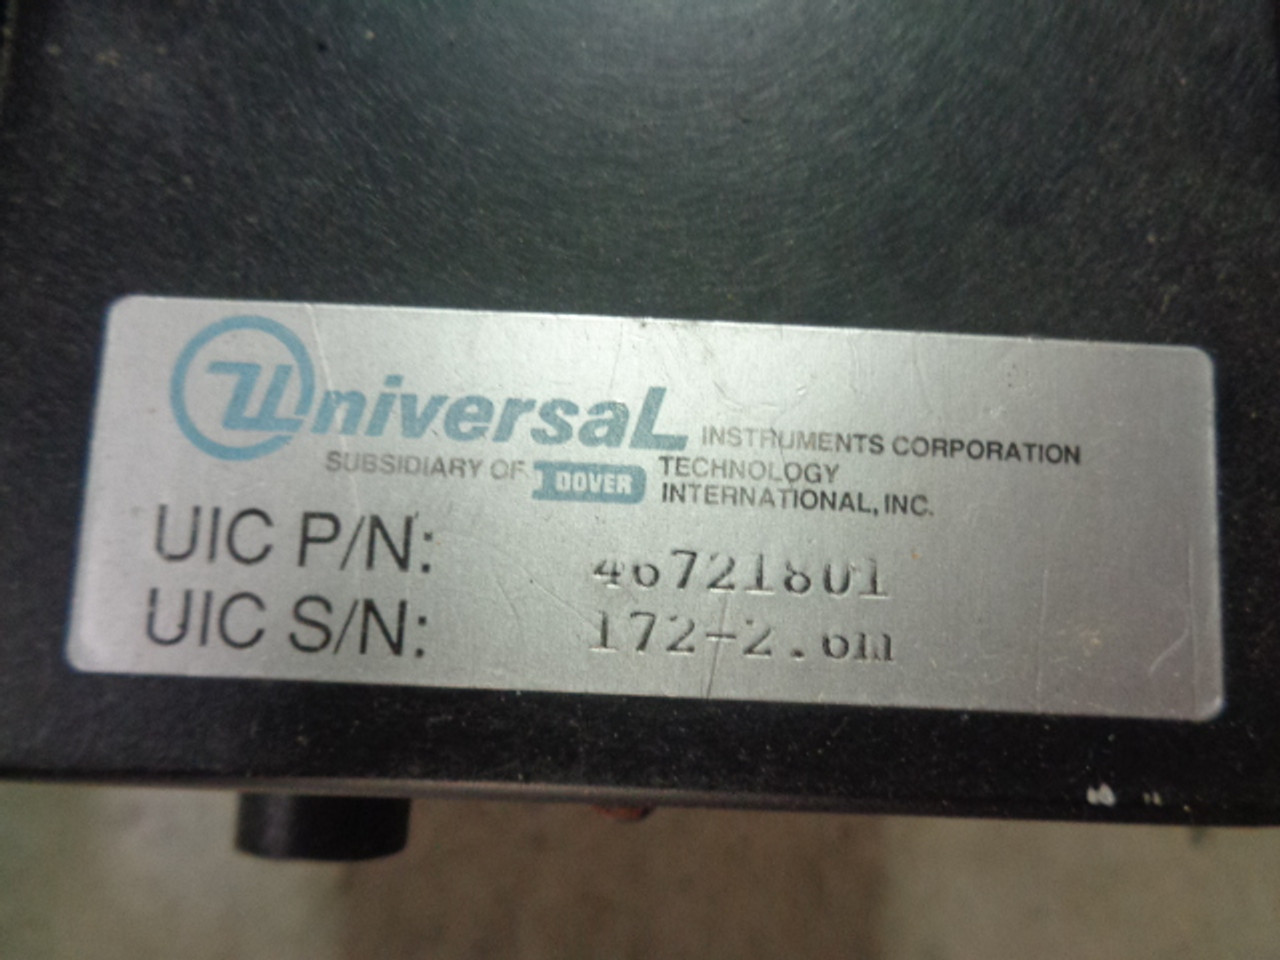 Universal Instruments 46721801 2.6 mil Camera2